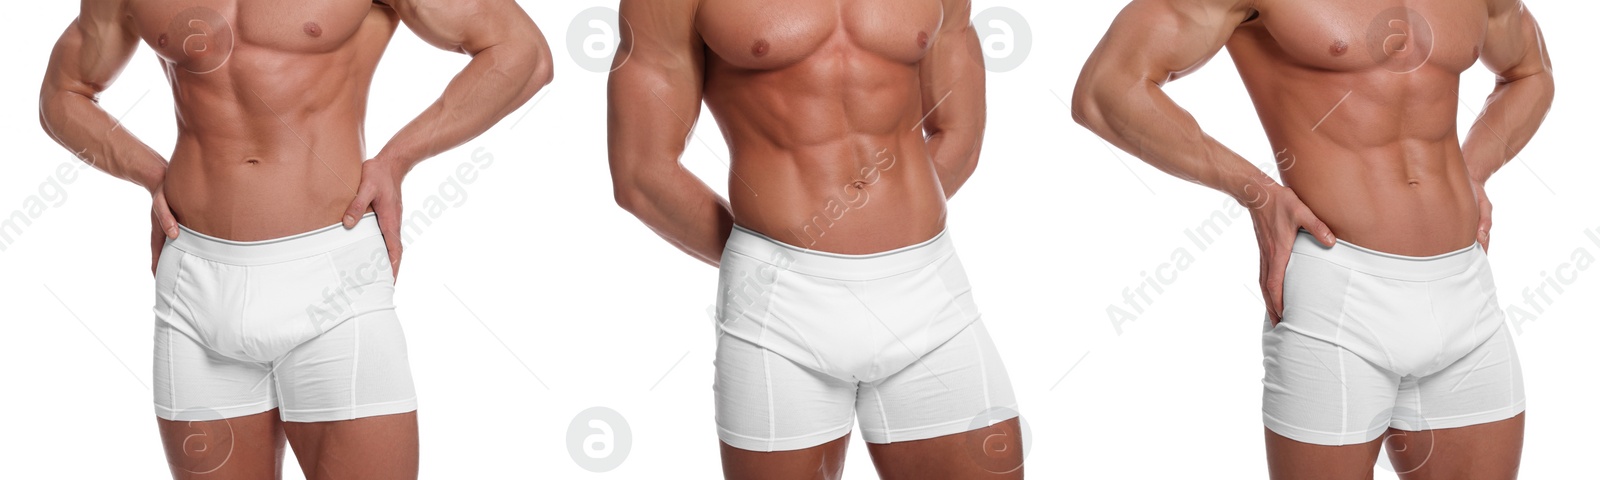 Image of Man in stylish underwear on white background, set of closeup photos